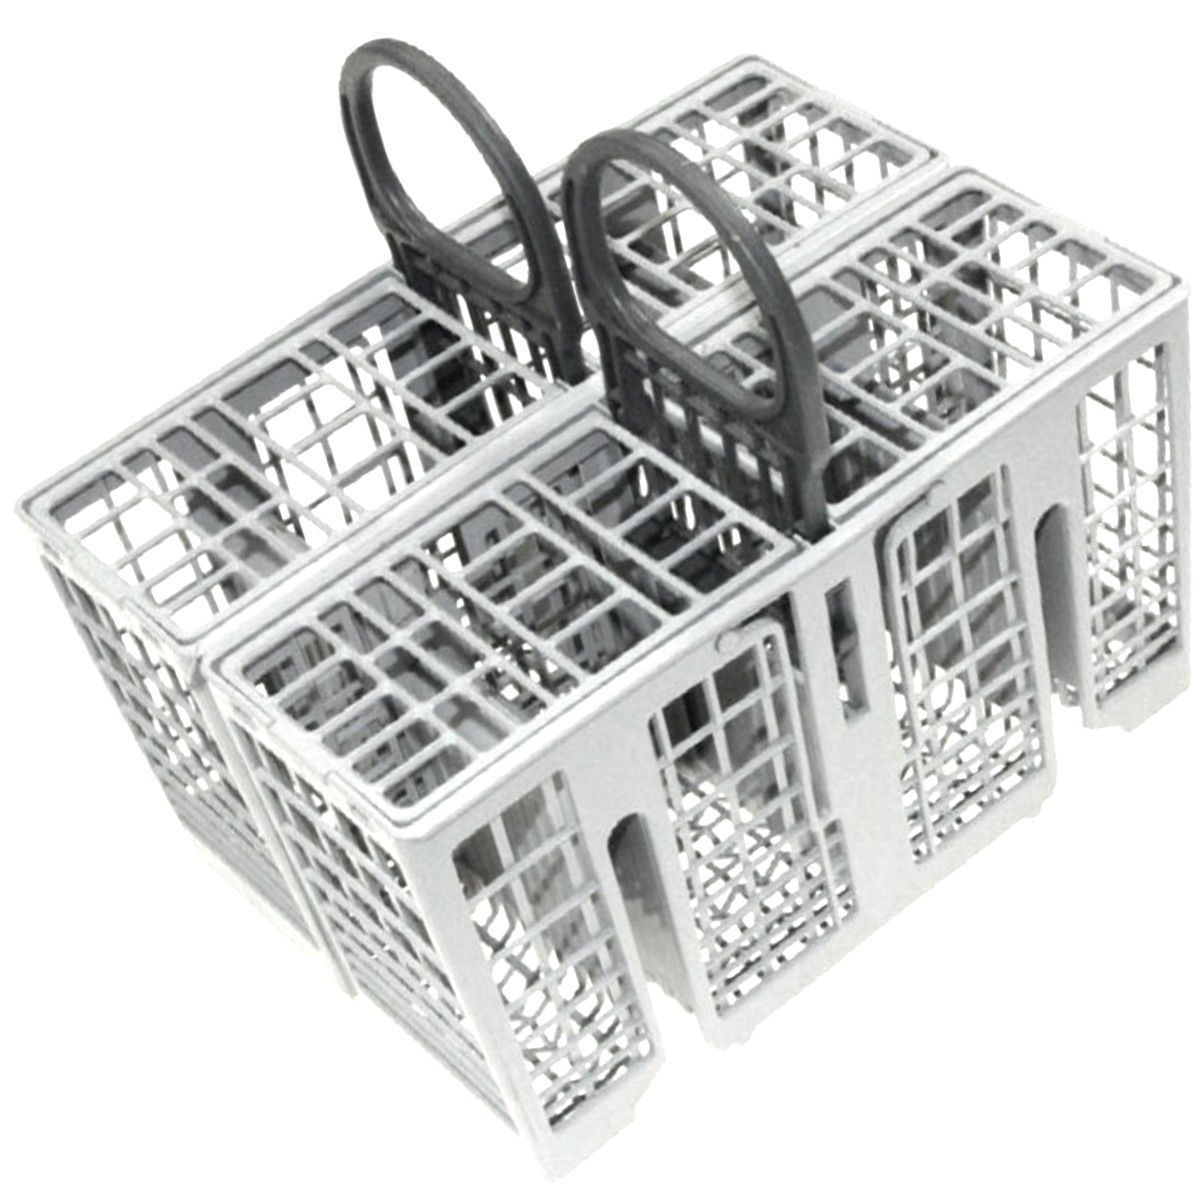 Cutlery Basket for Whirlpool Indesit Dishwashers - C00260860 Whirlpool / Indesit